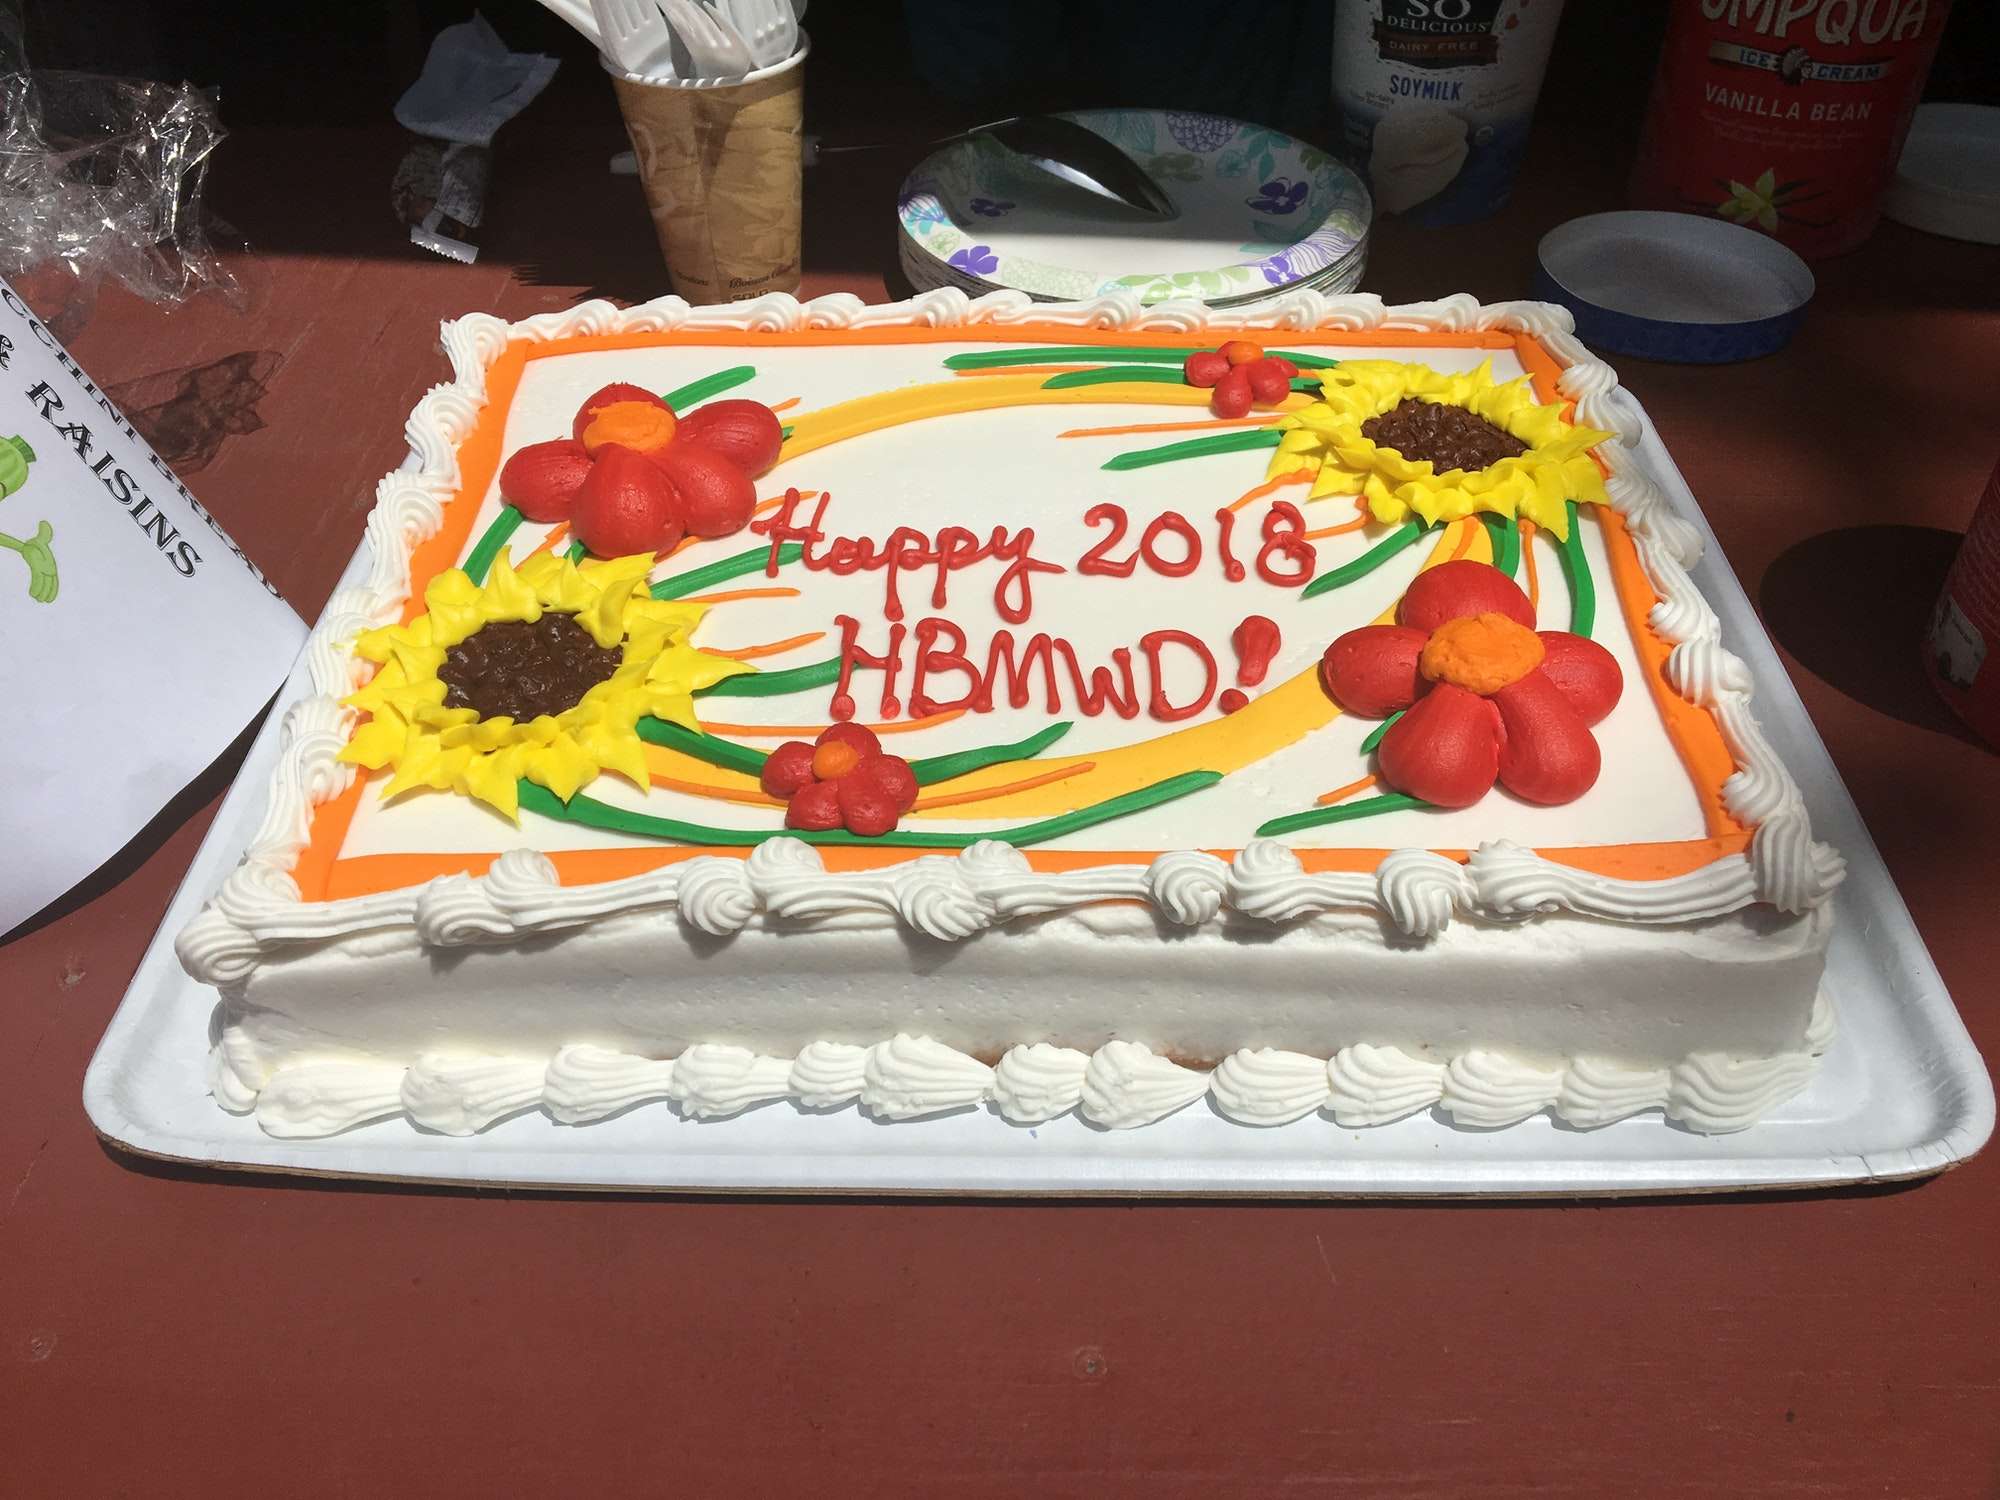 HBMWD birthday cake